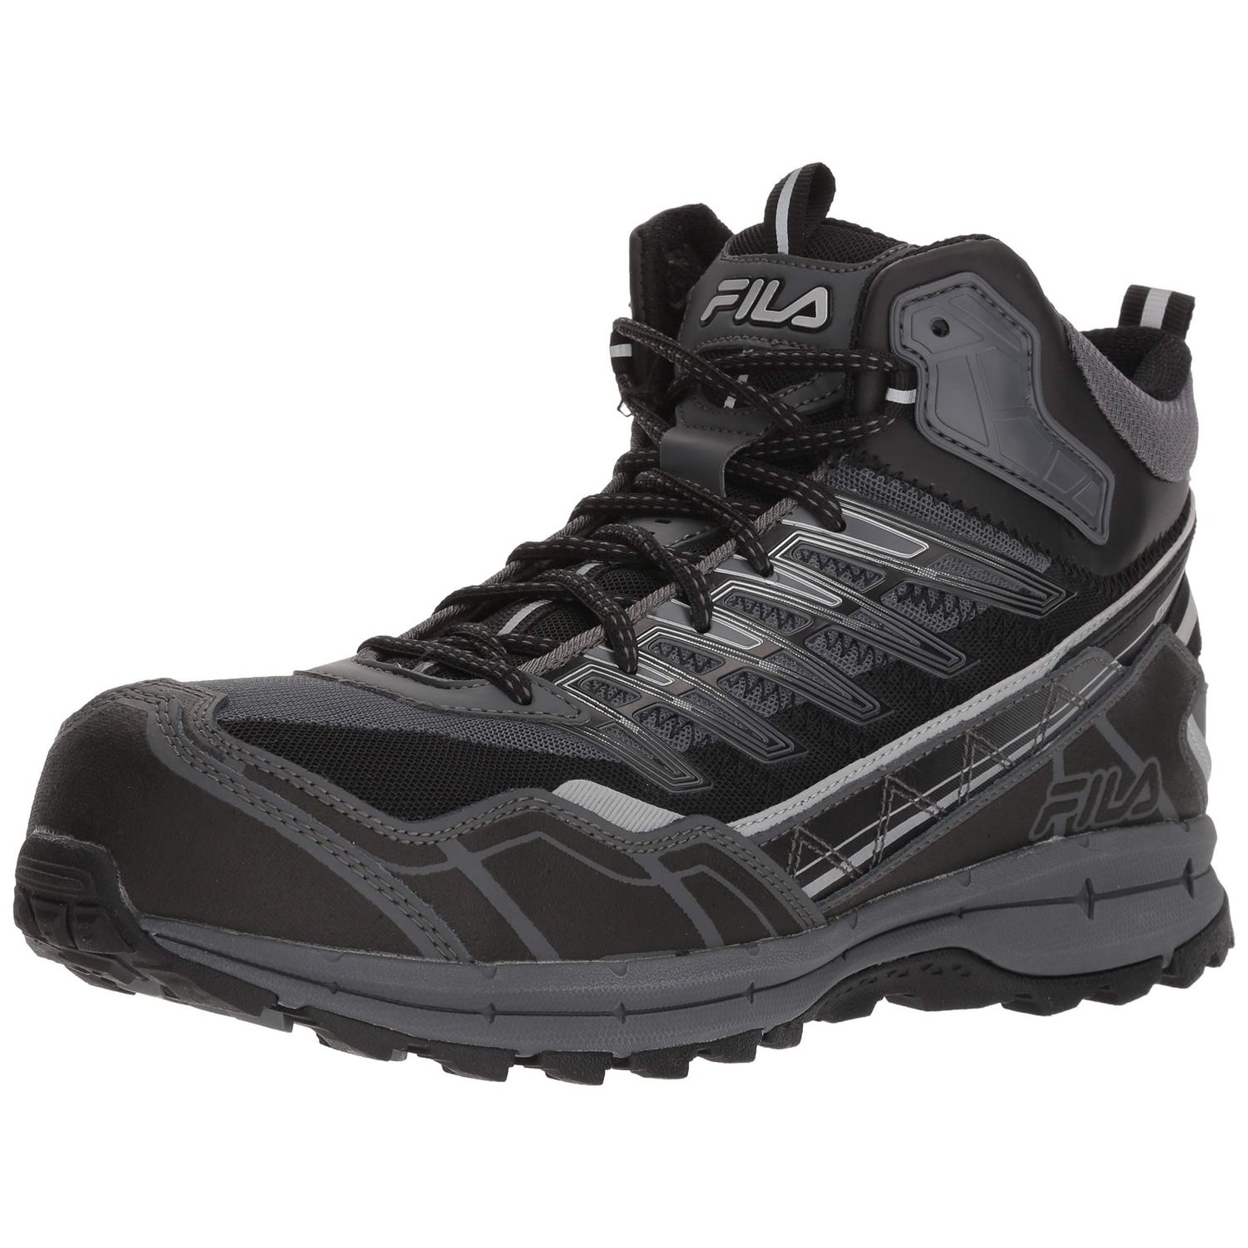 Fila Men's Hail Storm 3 Mid Composite Toe Trail Work Shoes Ct CSRK/BLK/MSIL - CSRK/BLK/MSIL, 9.5